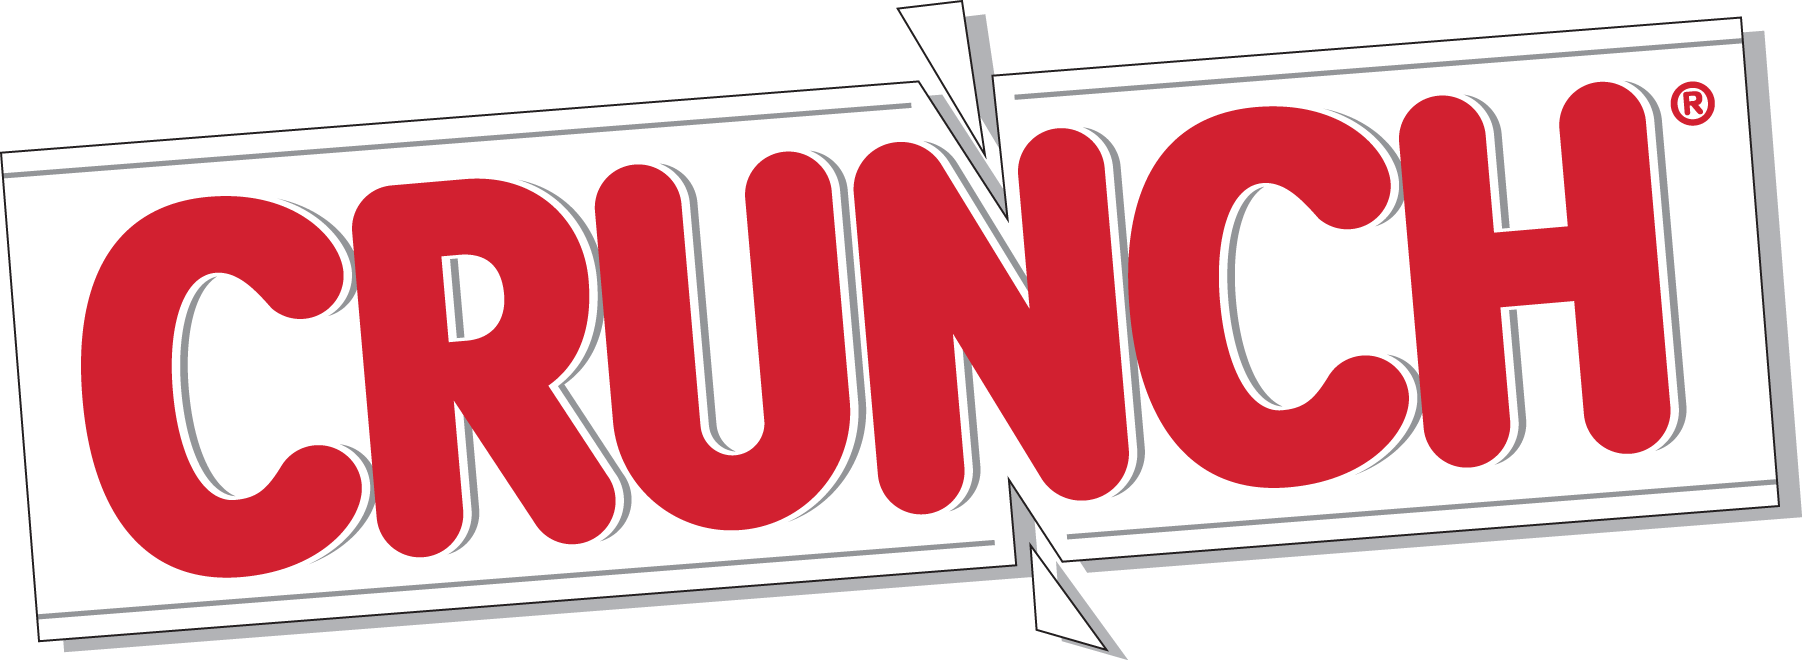 logo crunch